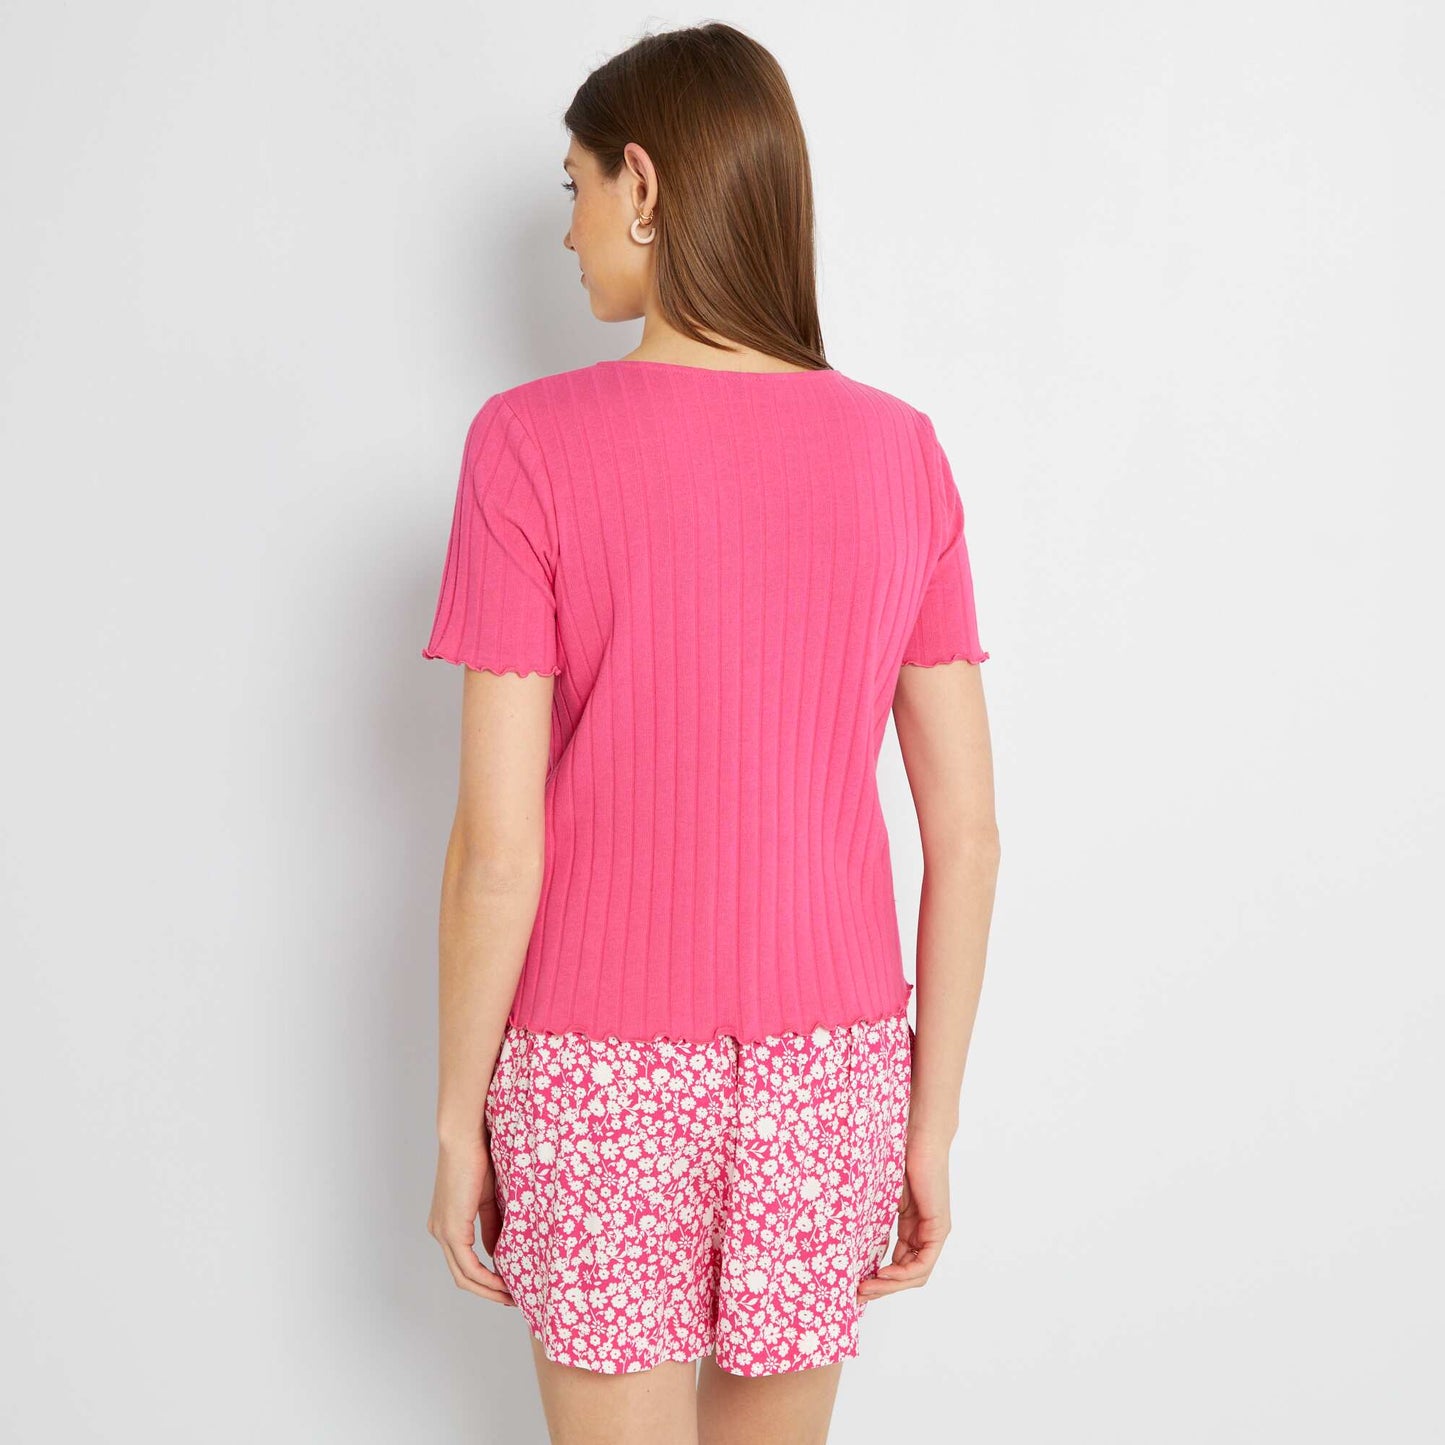 Camiseta lisa con botones rosa intenso